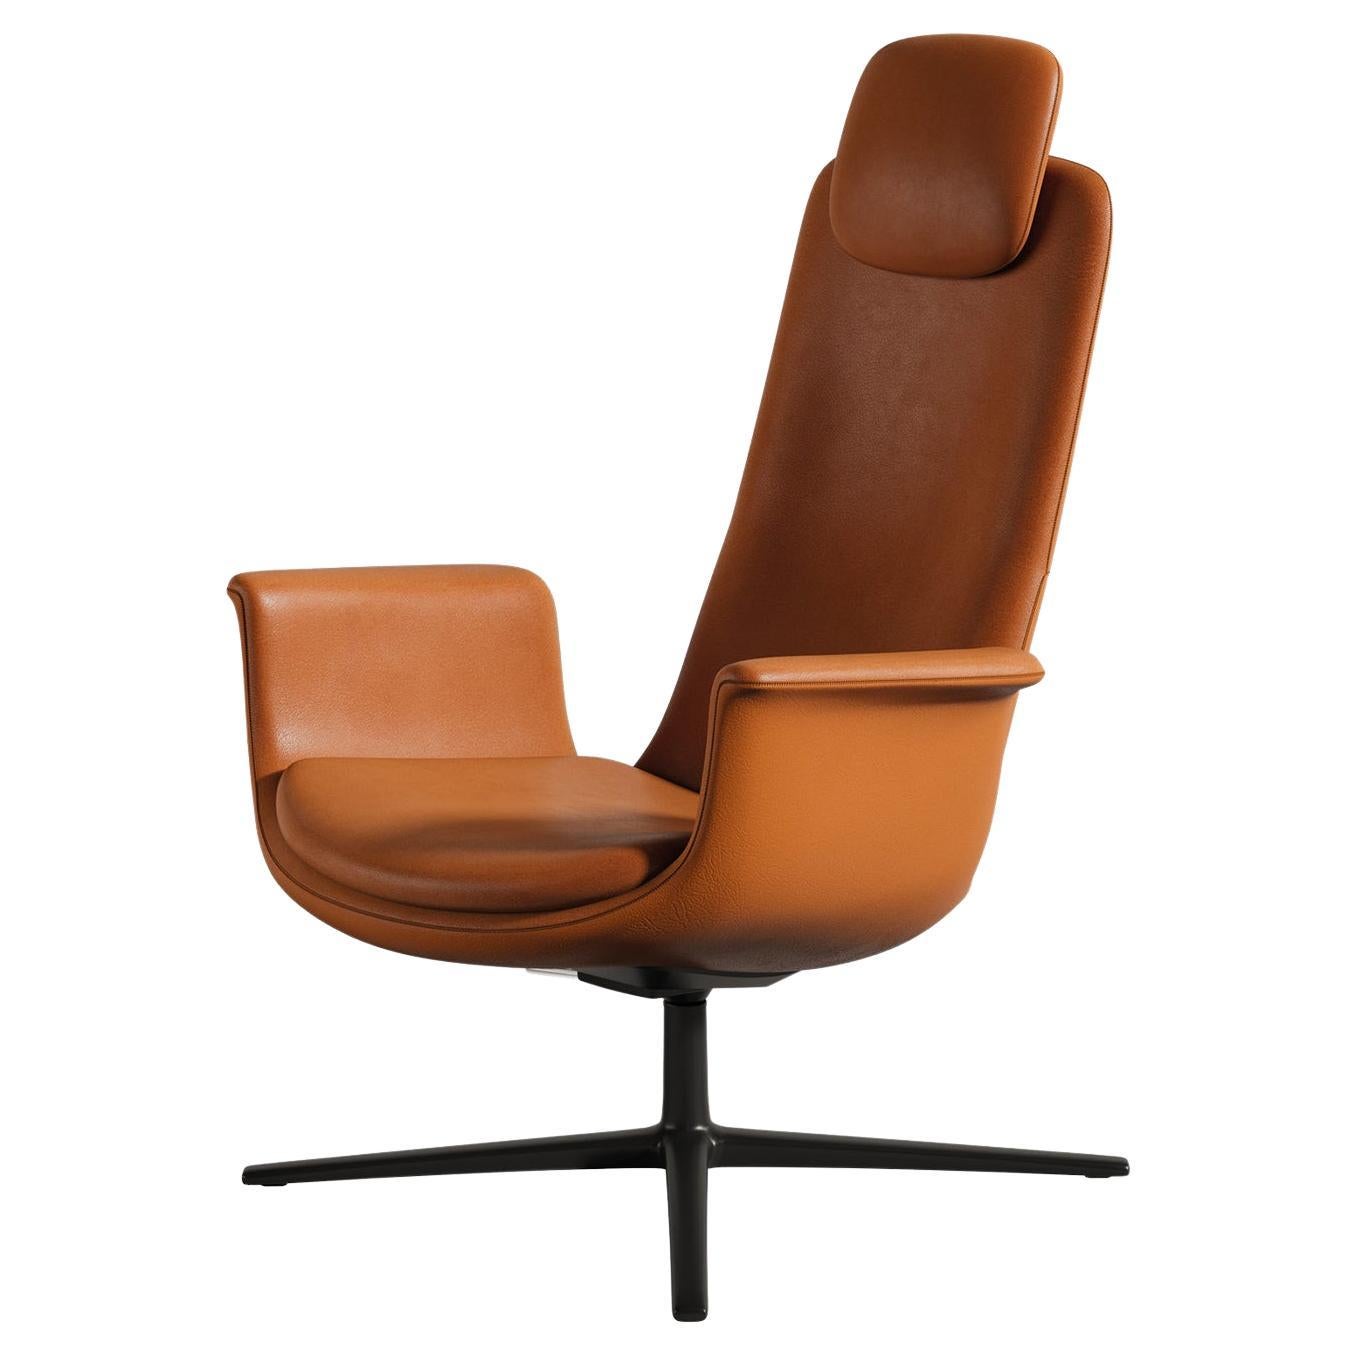 Fauteuil contemporain, chaise de bureau, fauteuil club "Odyssey" en cuir marron 